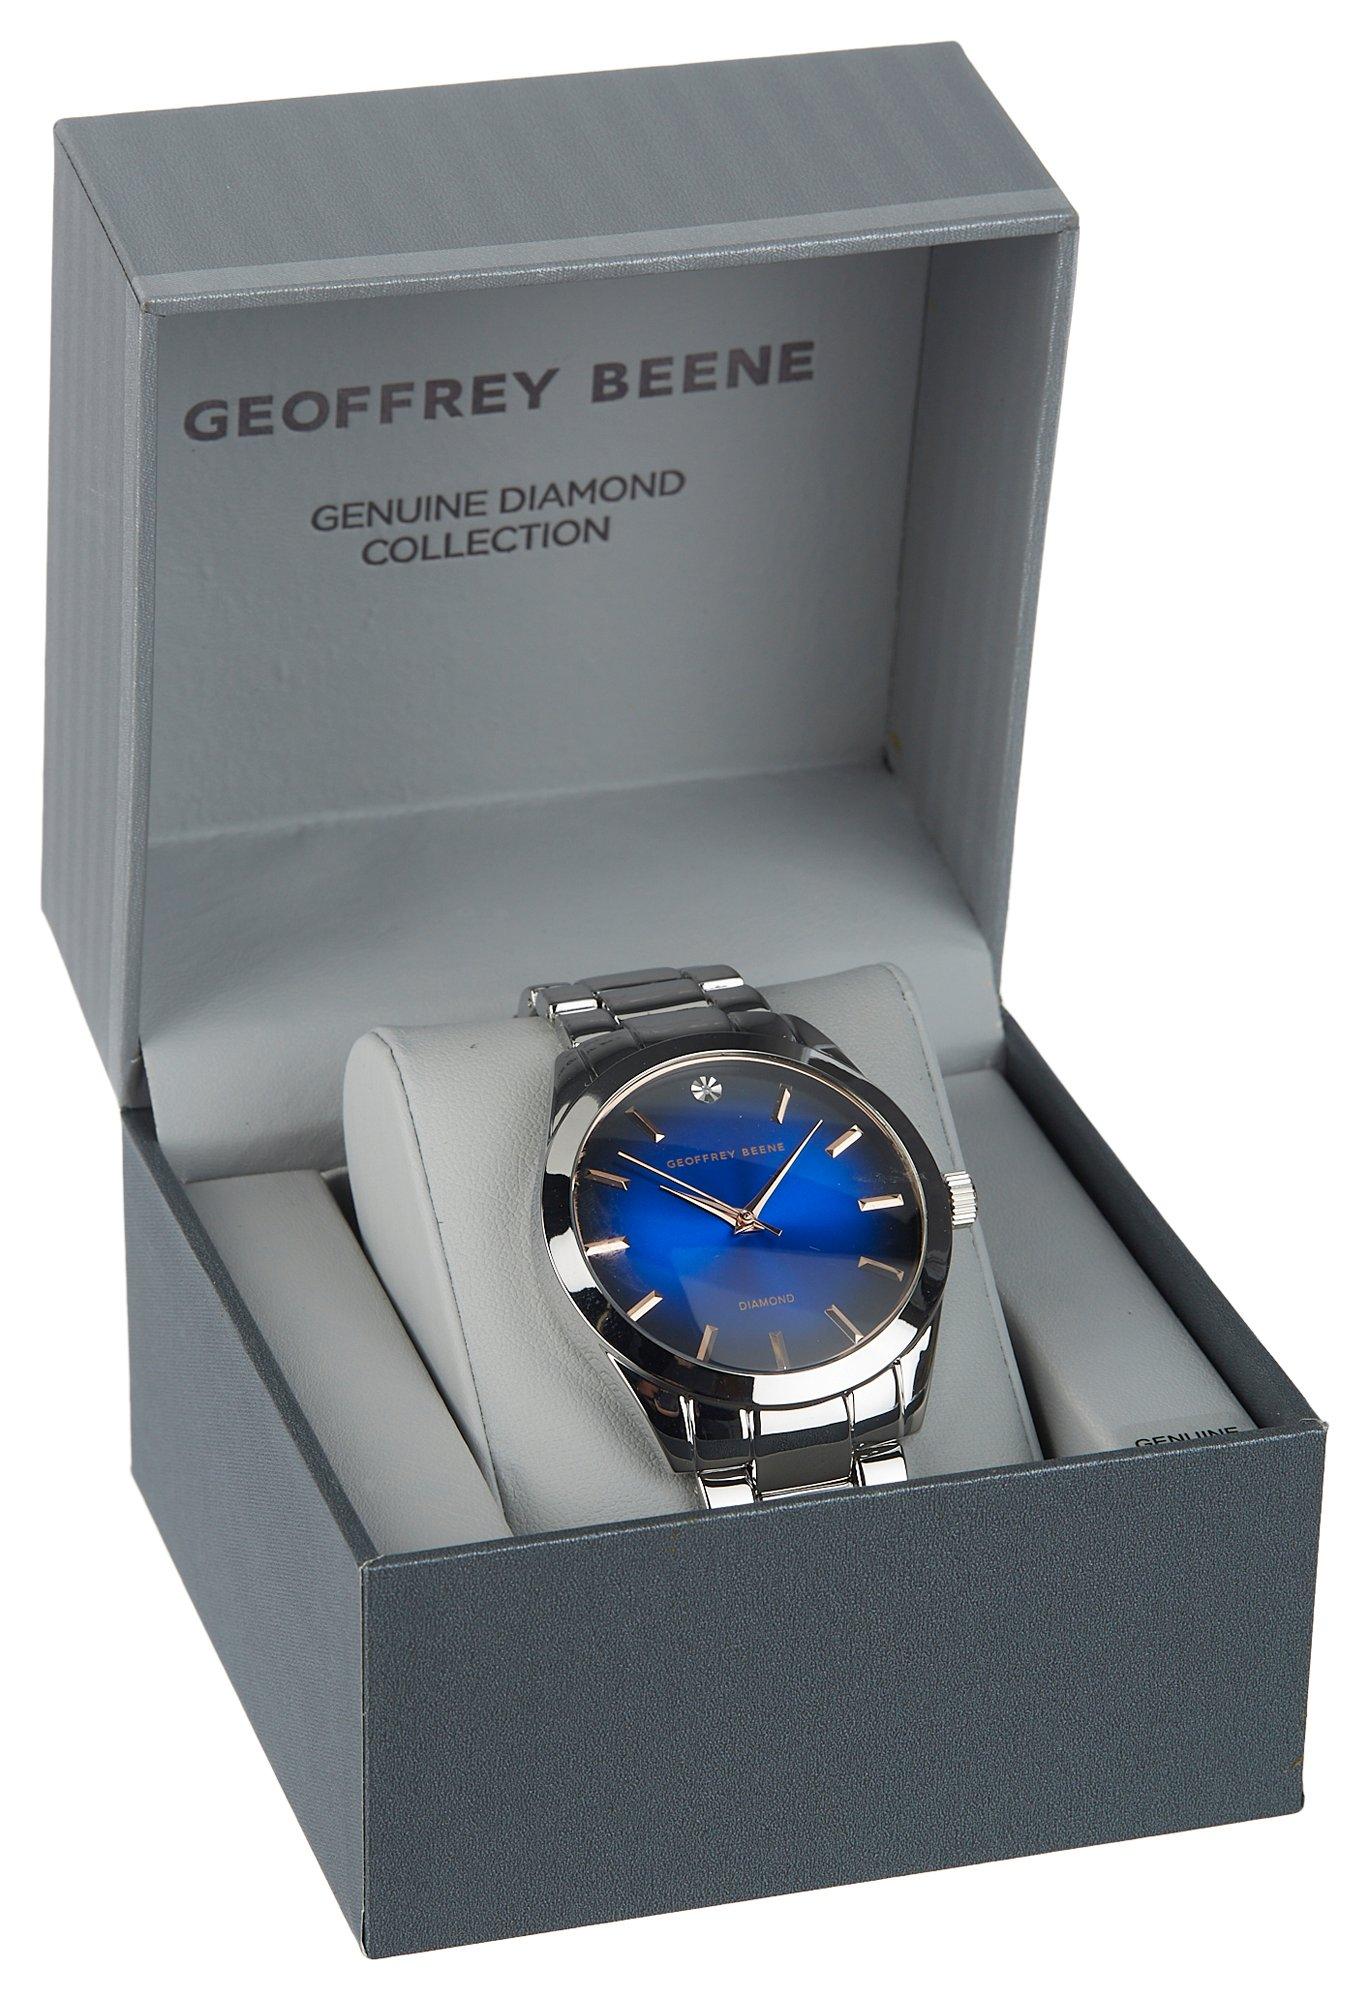 Geoffrey Beene Mens Genuine Diamond Link Analog Watch